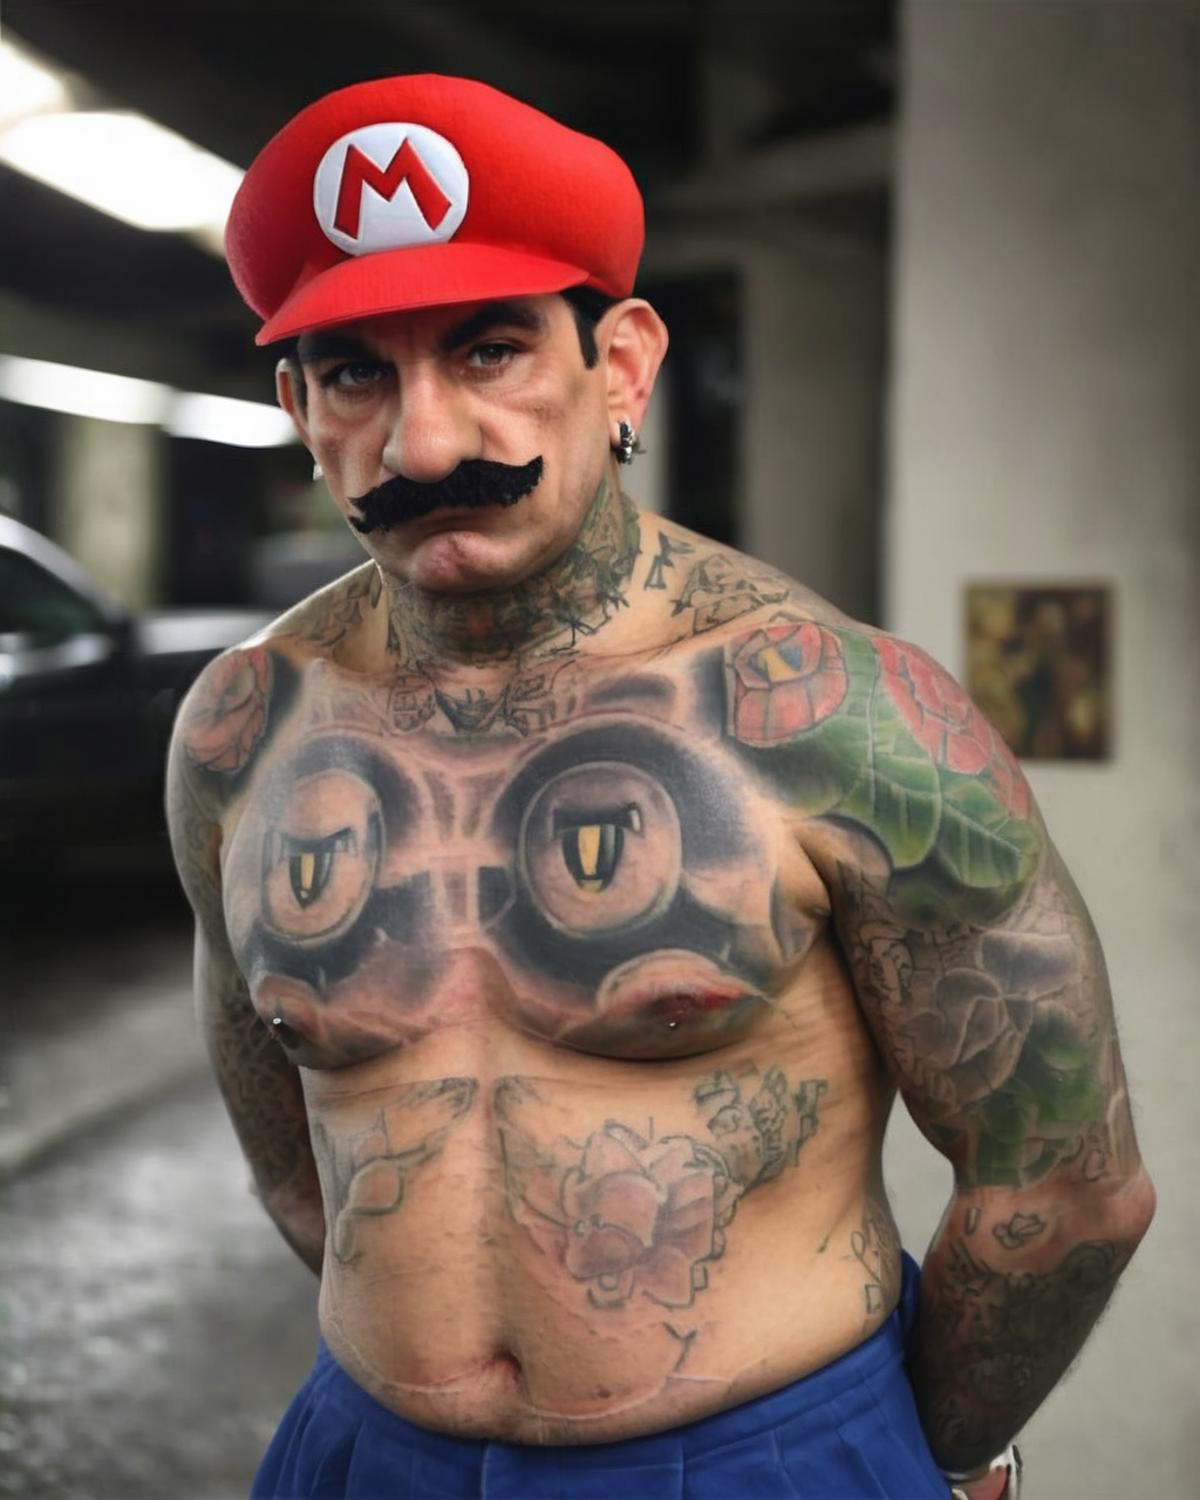 Real Mario image by Ciro_Negrogni